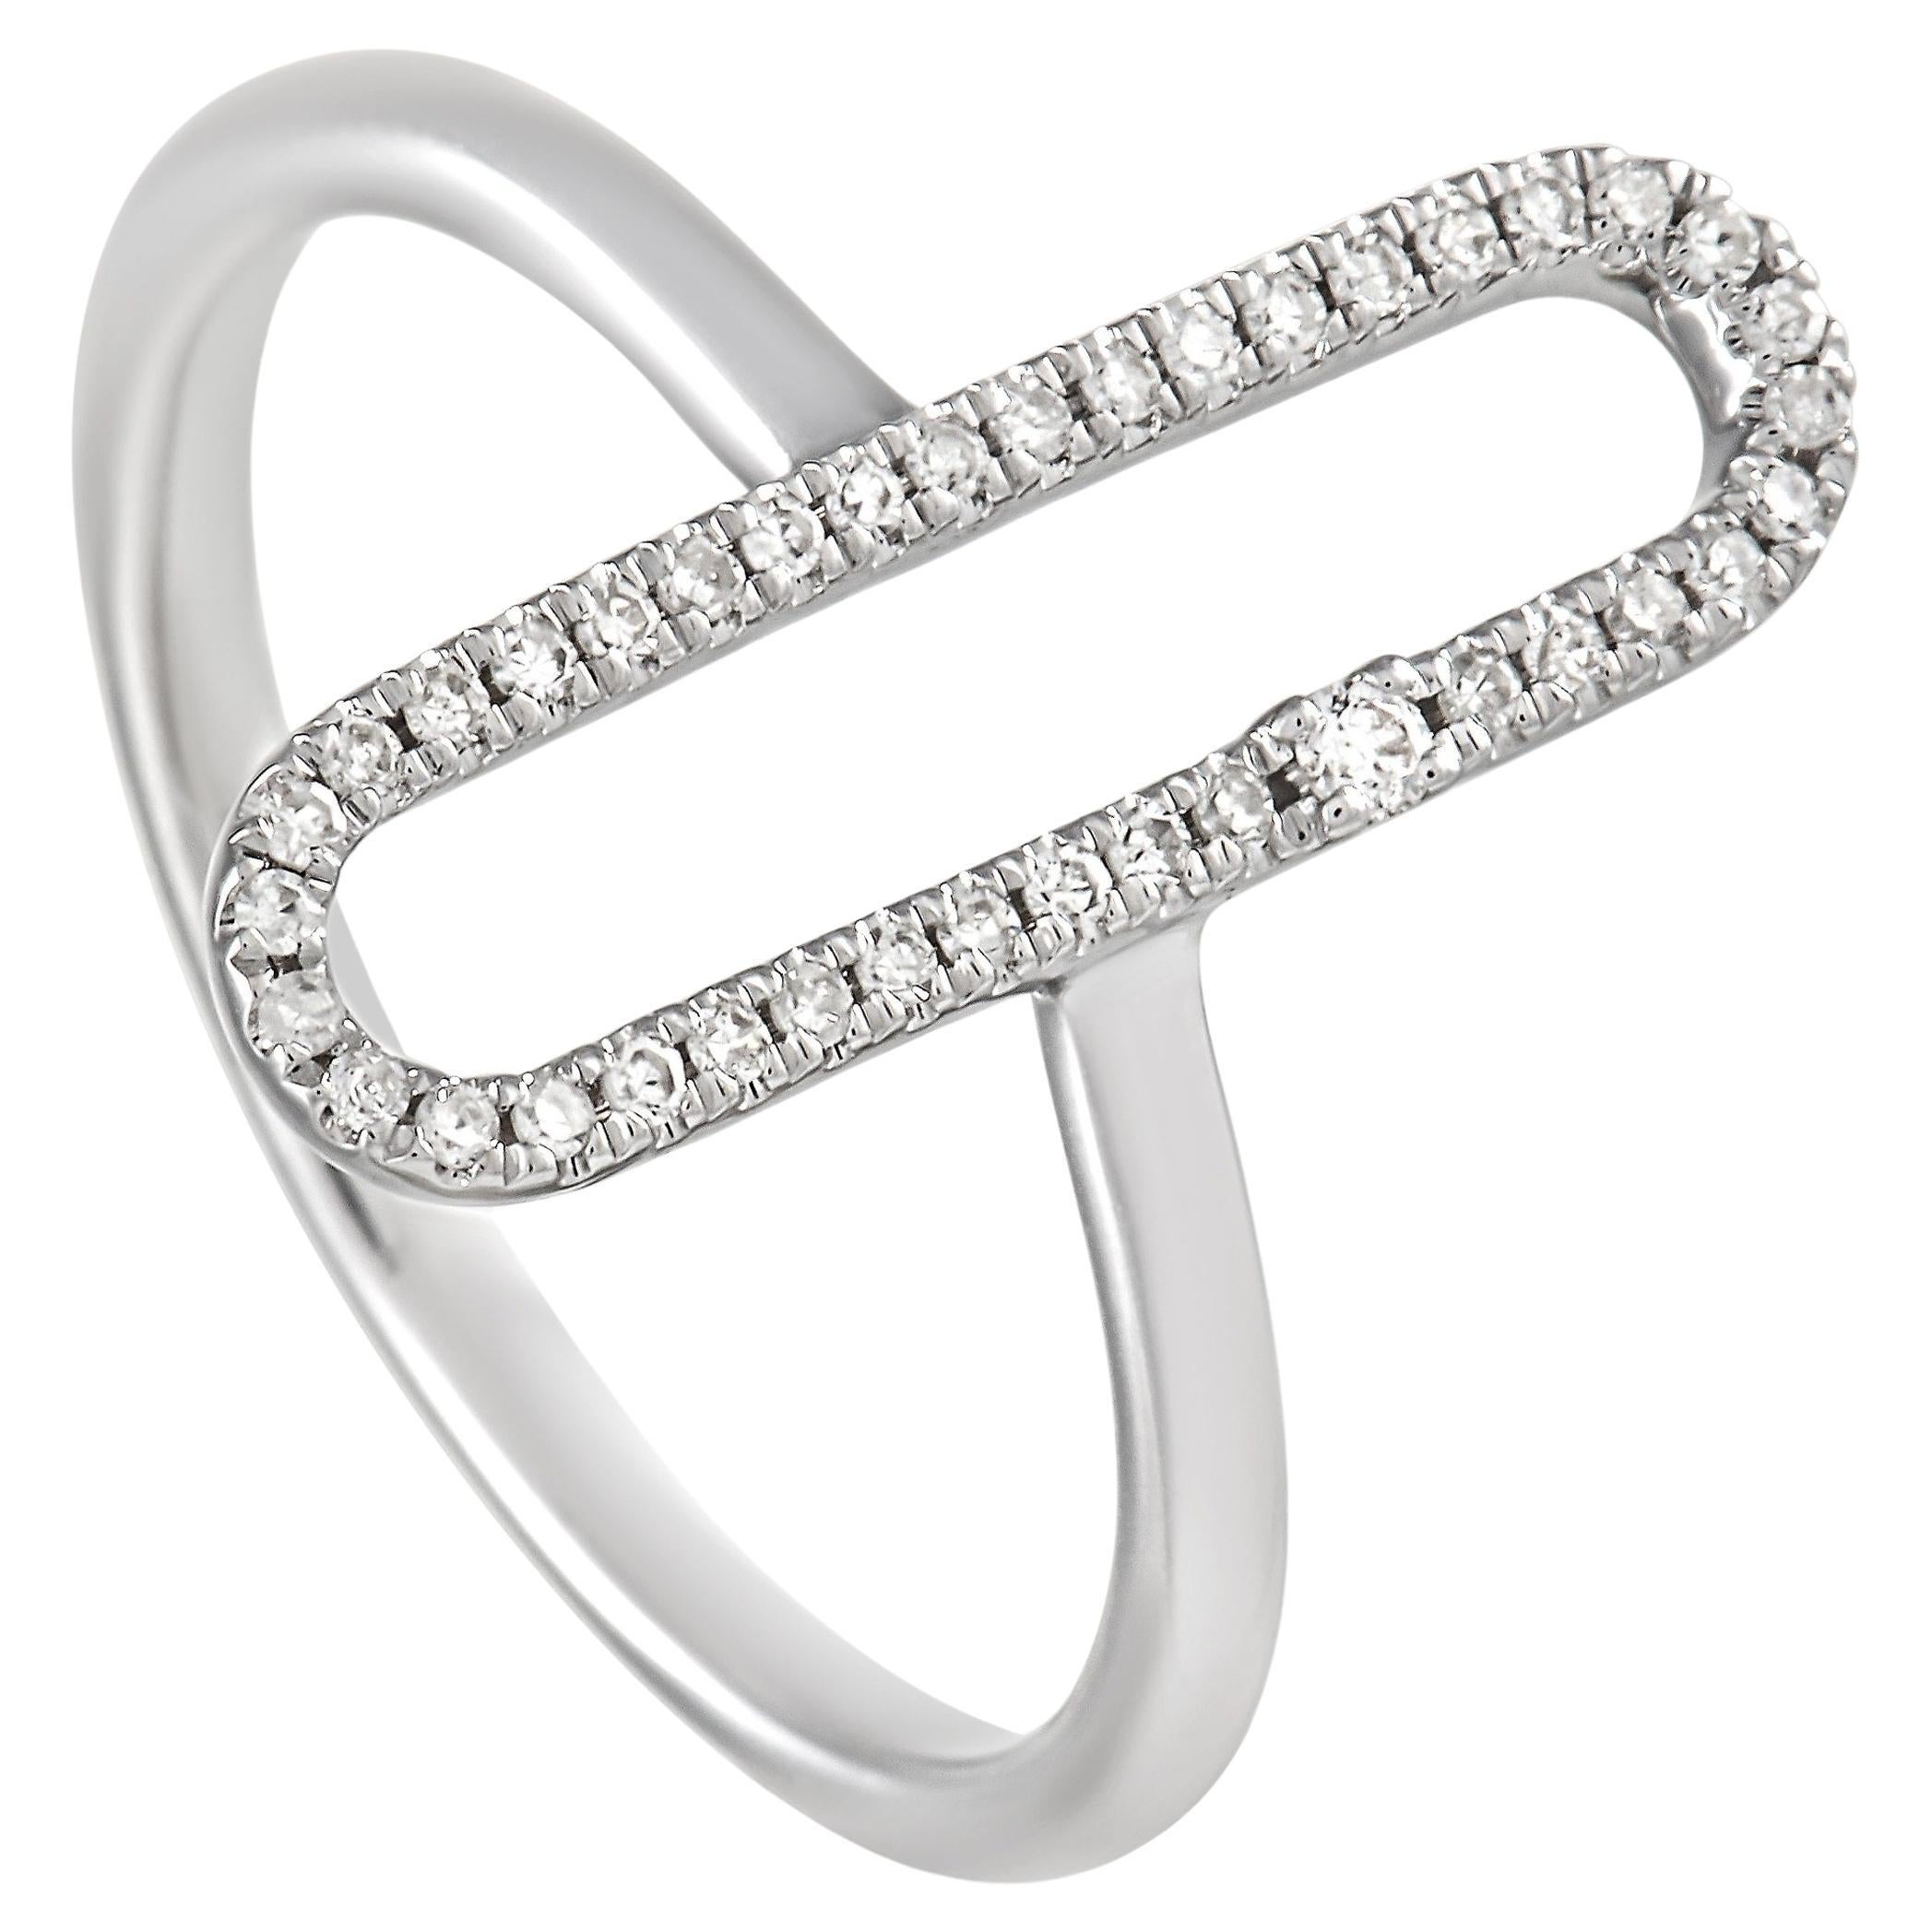 LB Exclusive 14K White Gold 0.15 ct Diamond Ring